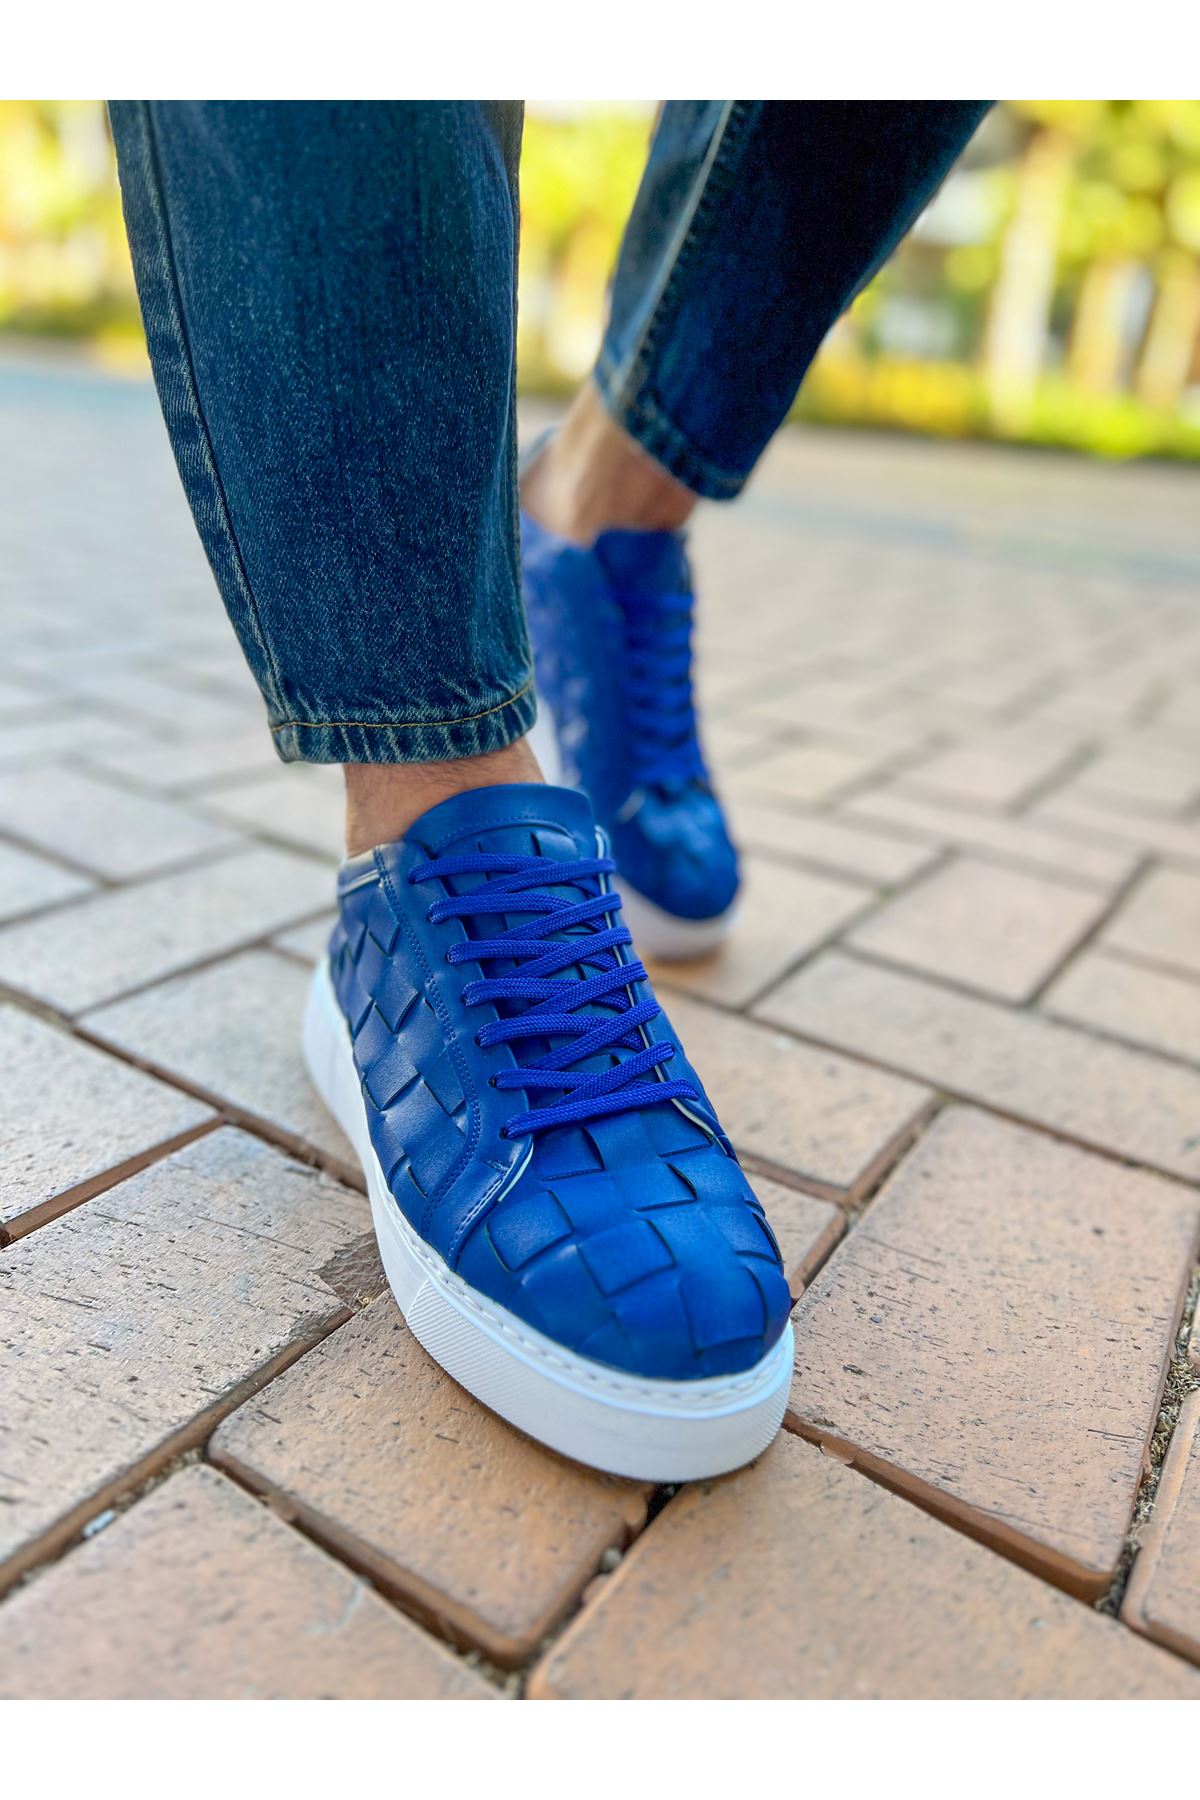 CH209 OBT Vimini Men's Shoes sneakers BLUE - STREETMODE™